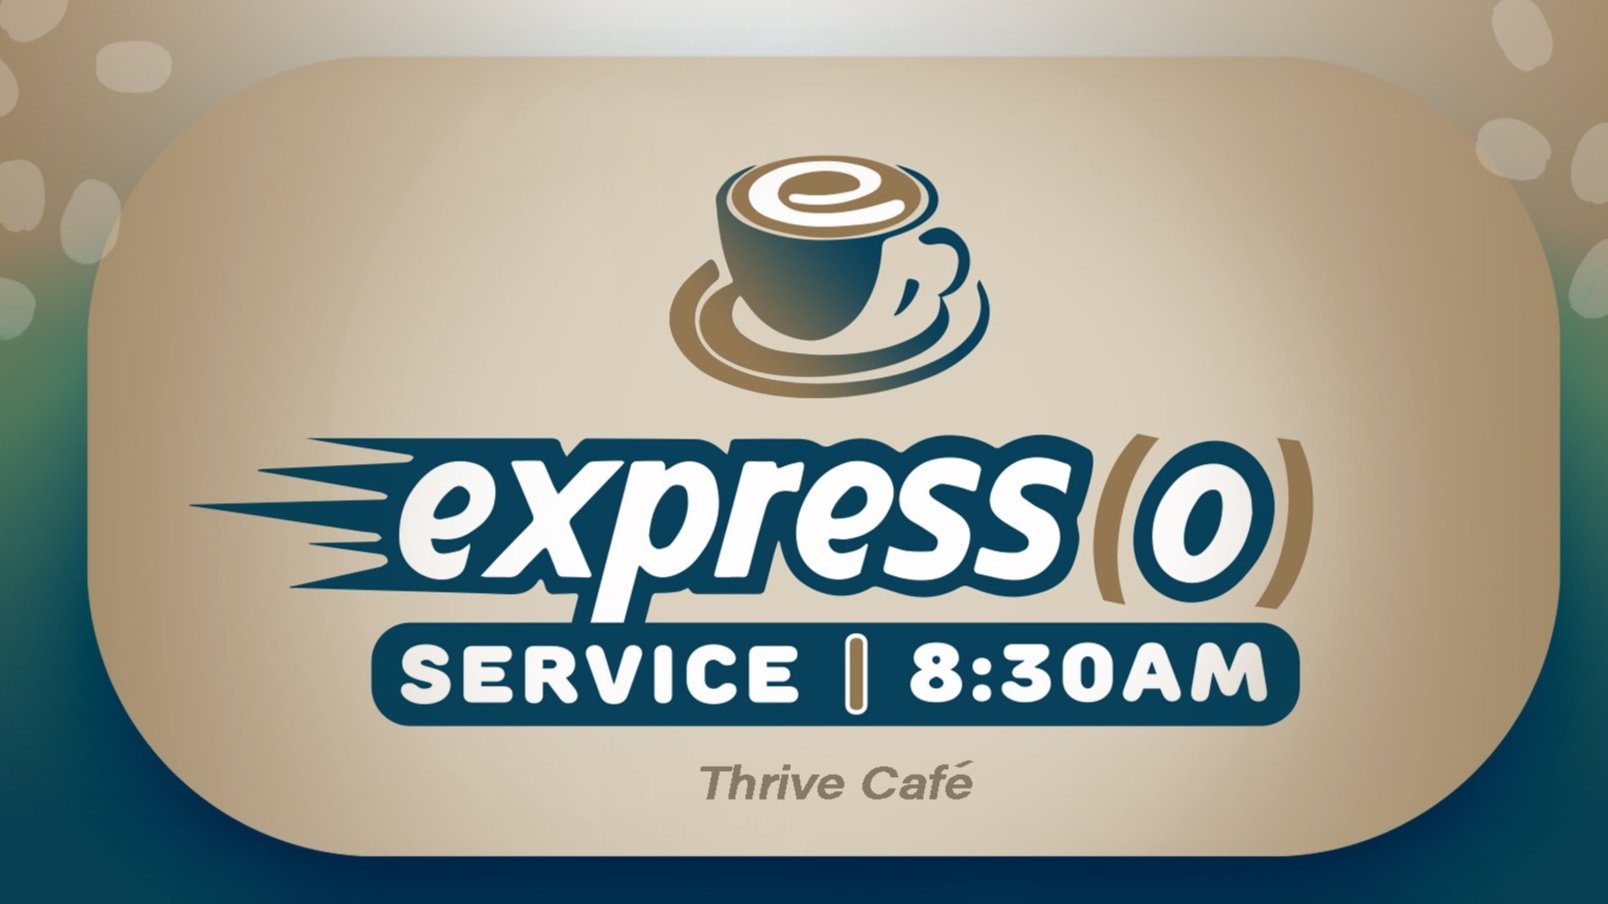 Express(o) Service.jpg